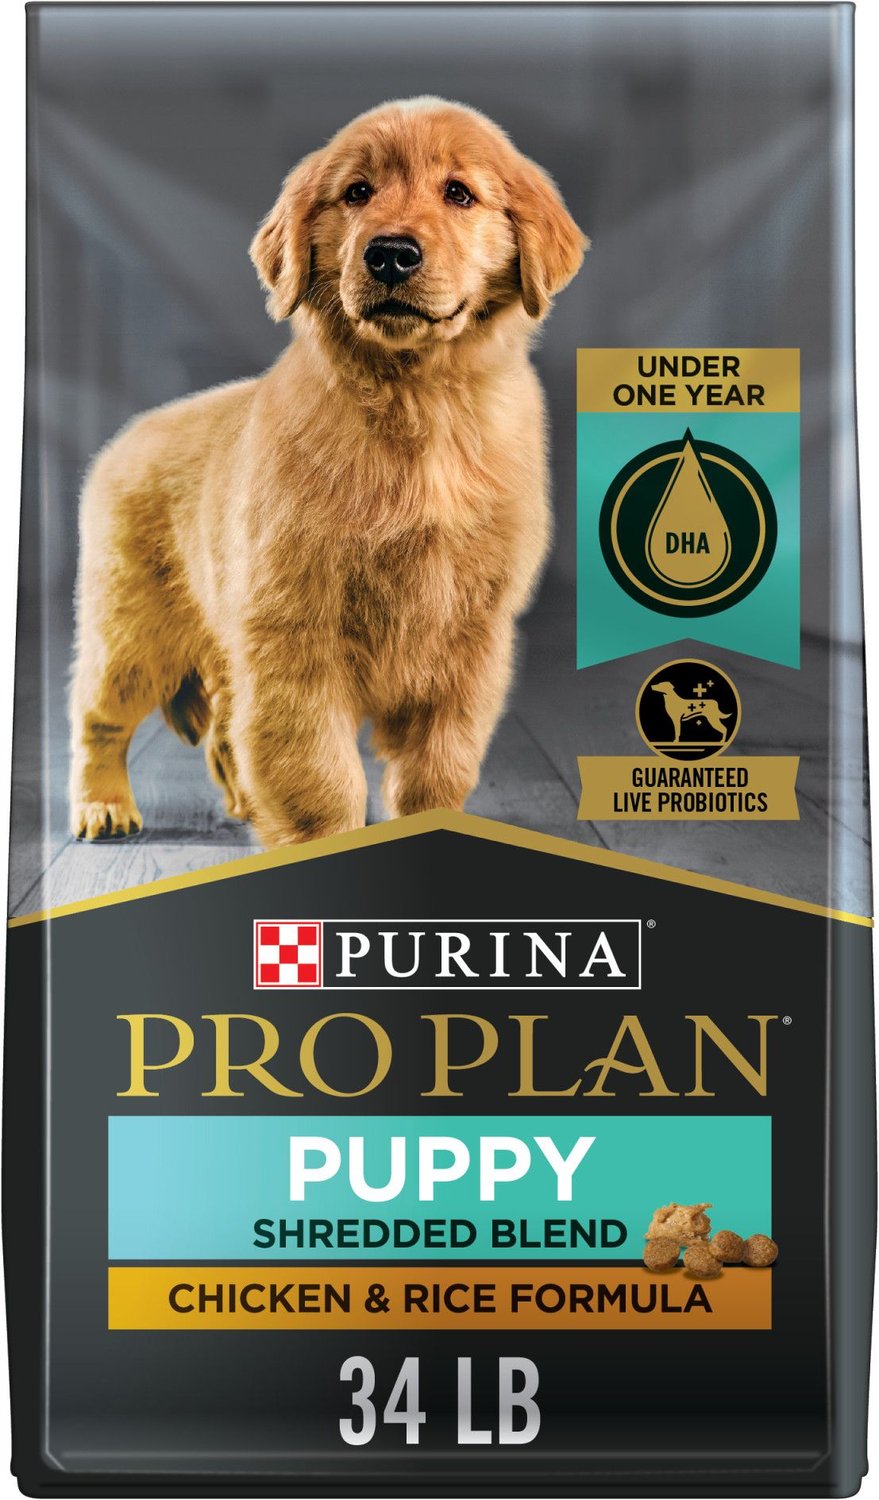 Pro Plan Puppy Food Feeding Chart